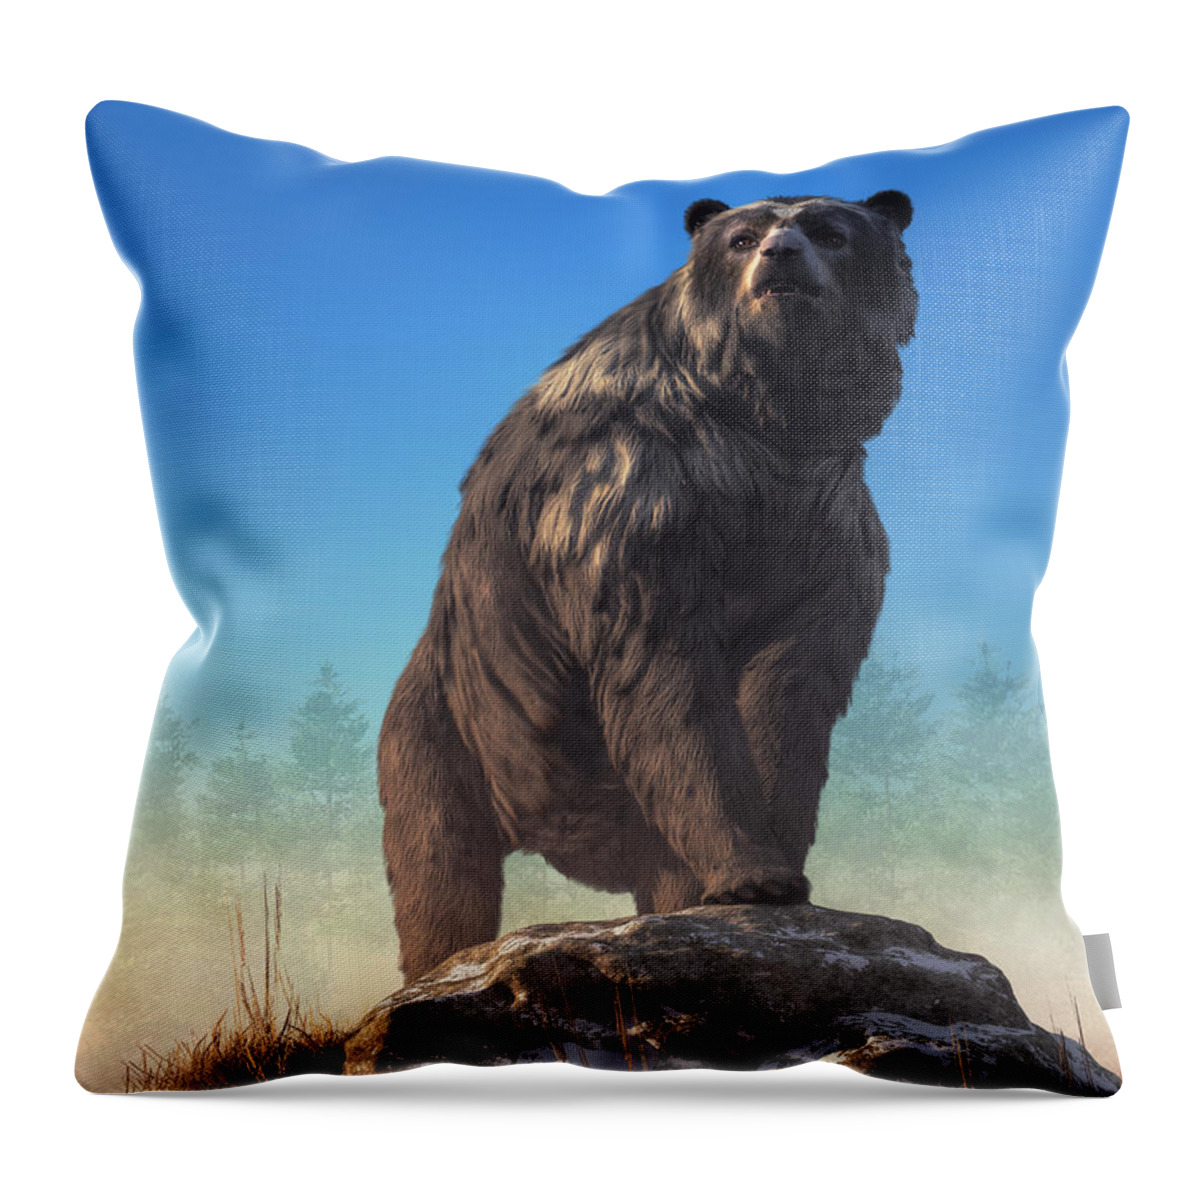 Cave Bear Throw Pillow featuring the digital art Arctodus, The Short Faced Bear by Daniel Eskridge